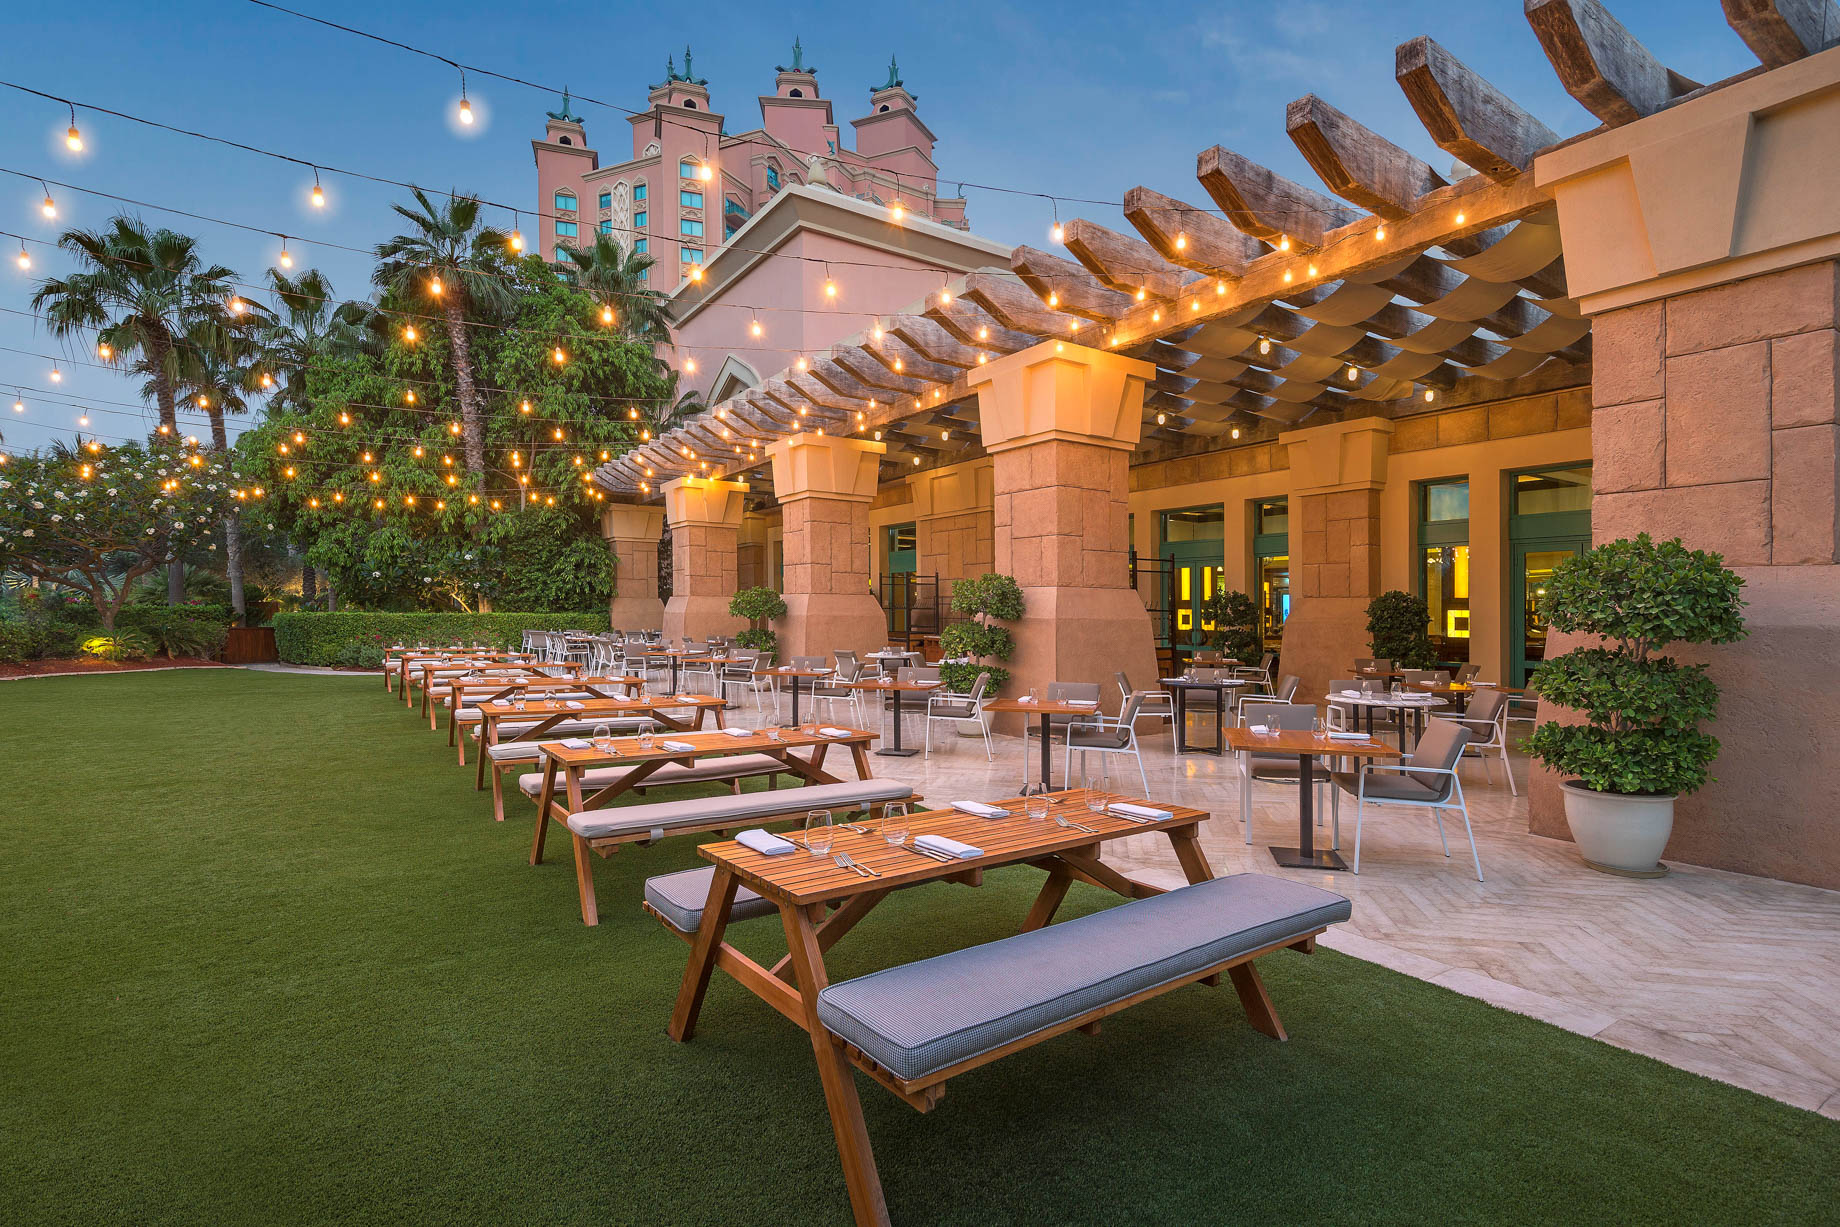 Atlantis The Palm Resort - Crescent Rd, Dubai, UAE - Bread Street Kitchen and Bar Exterior